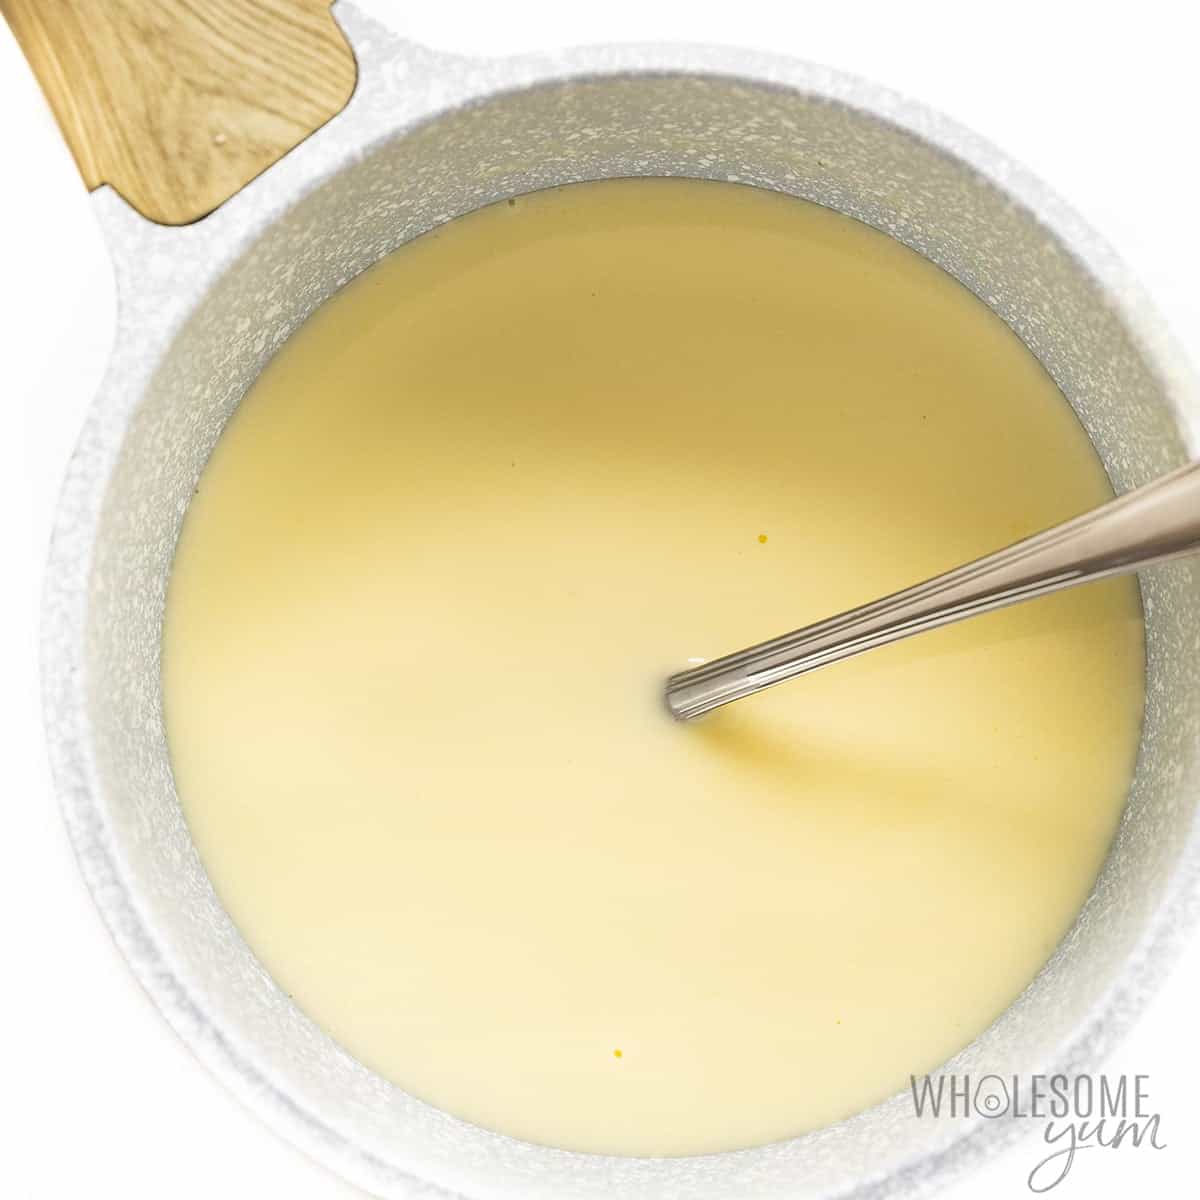 Cream heated in saucepan.